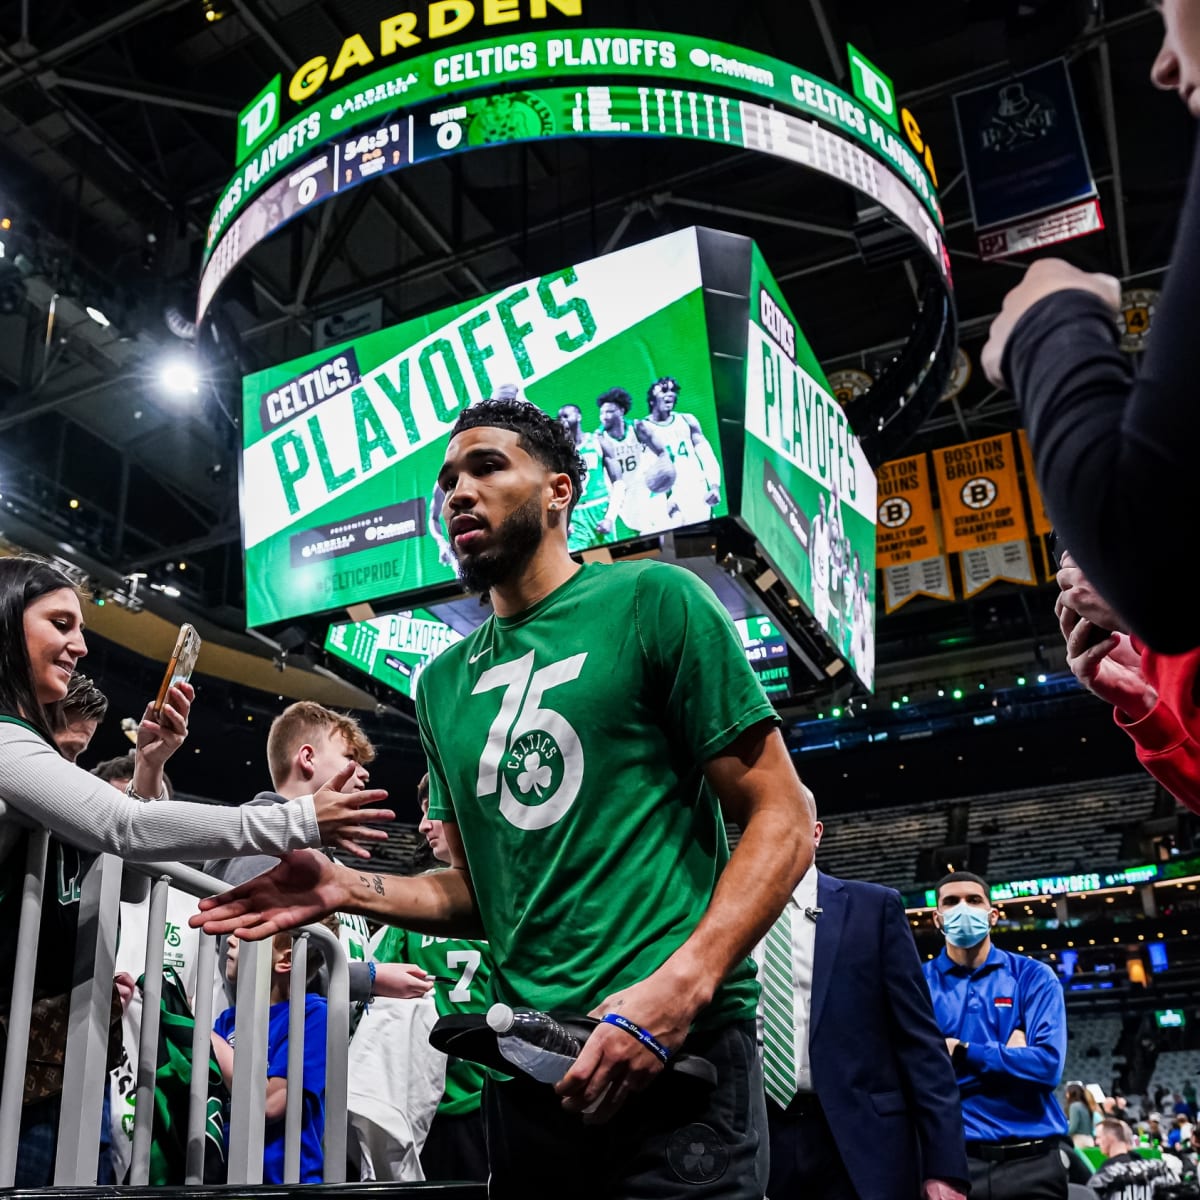 Boston Celtics Tatum Gameday Poster 11”x14” Playoff Game 4/17/22